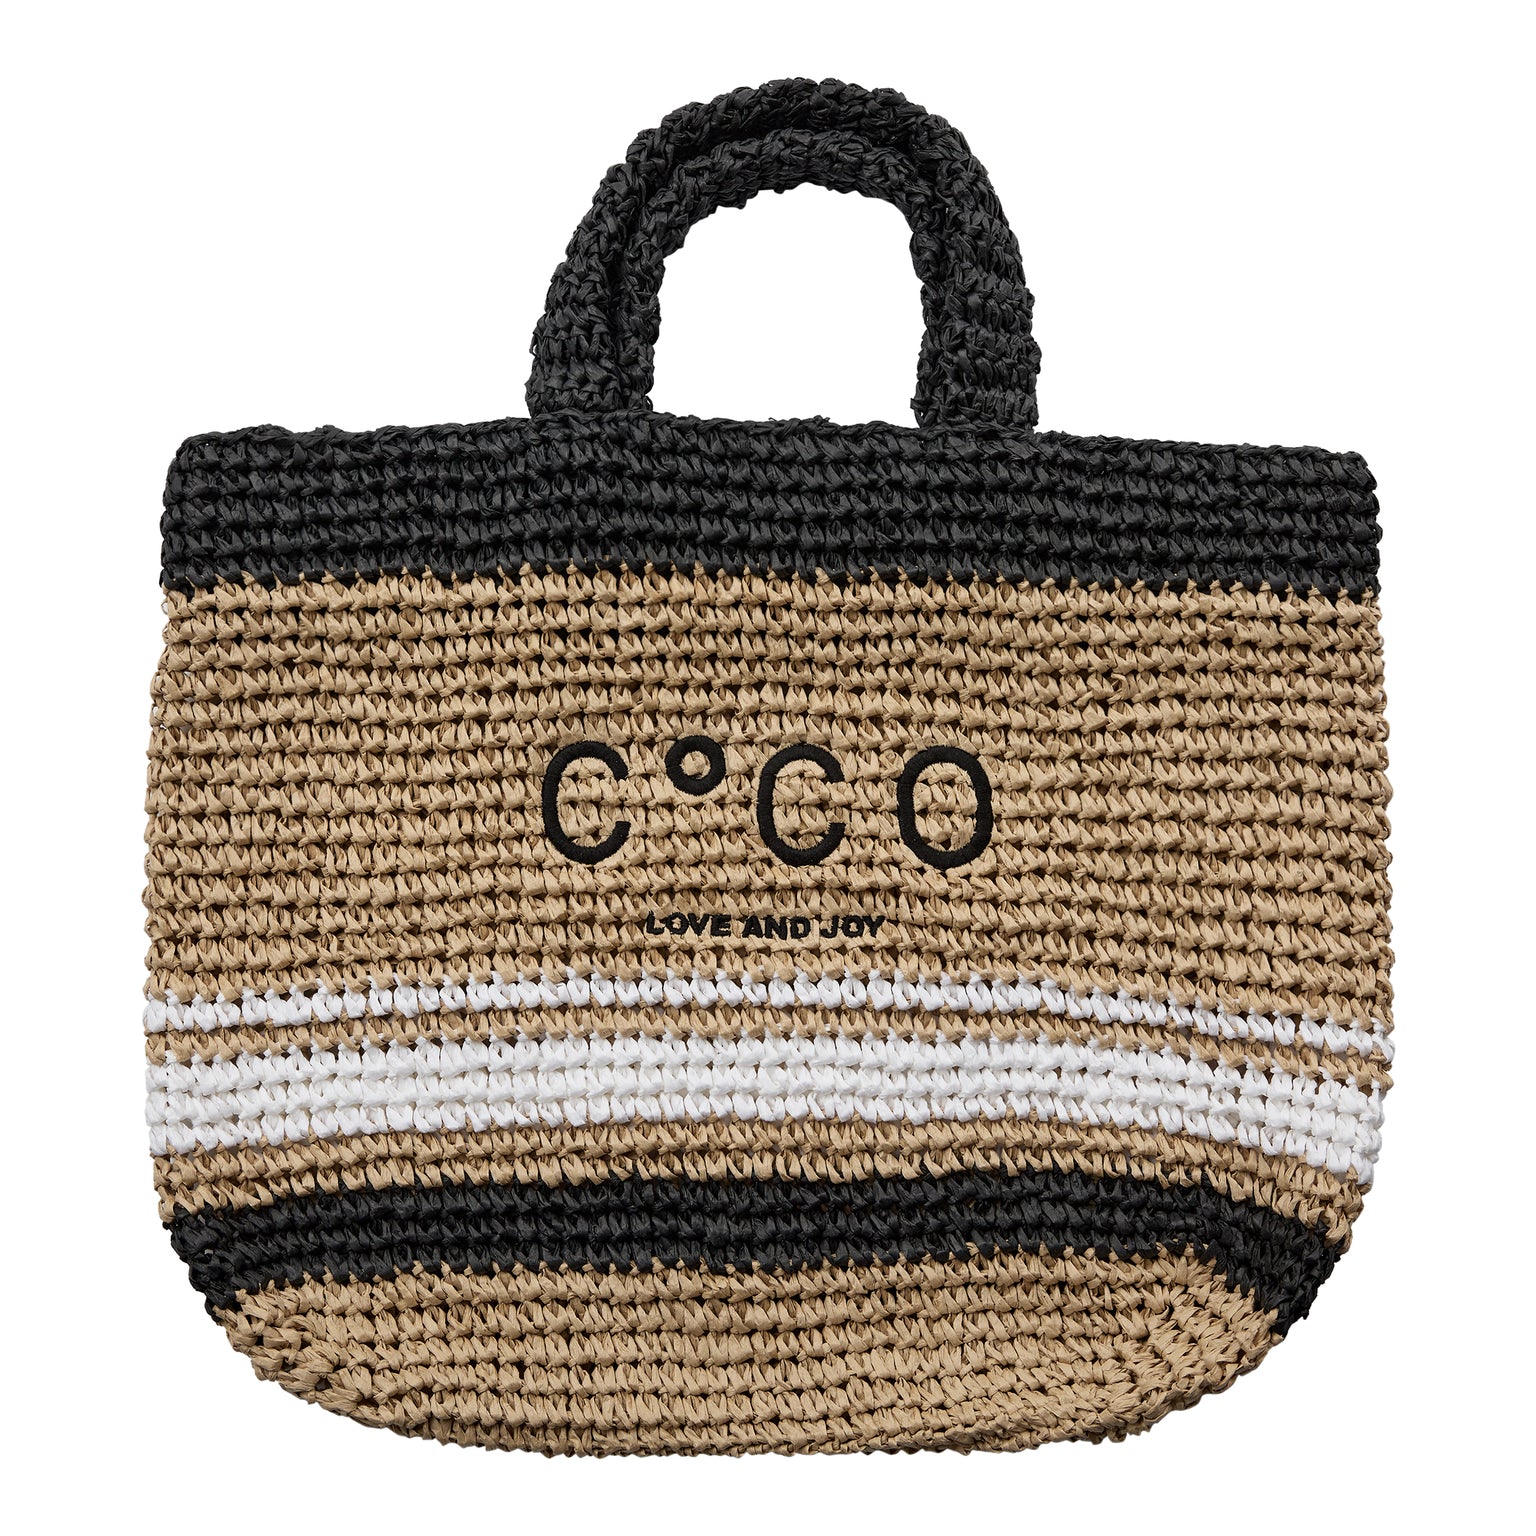 Cococc Straw Bag - Straw